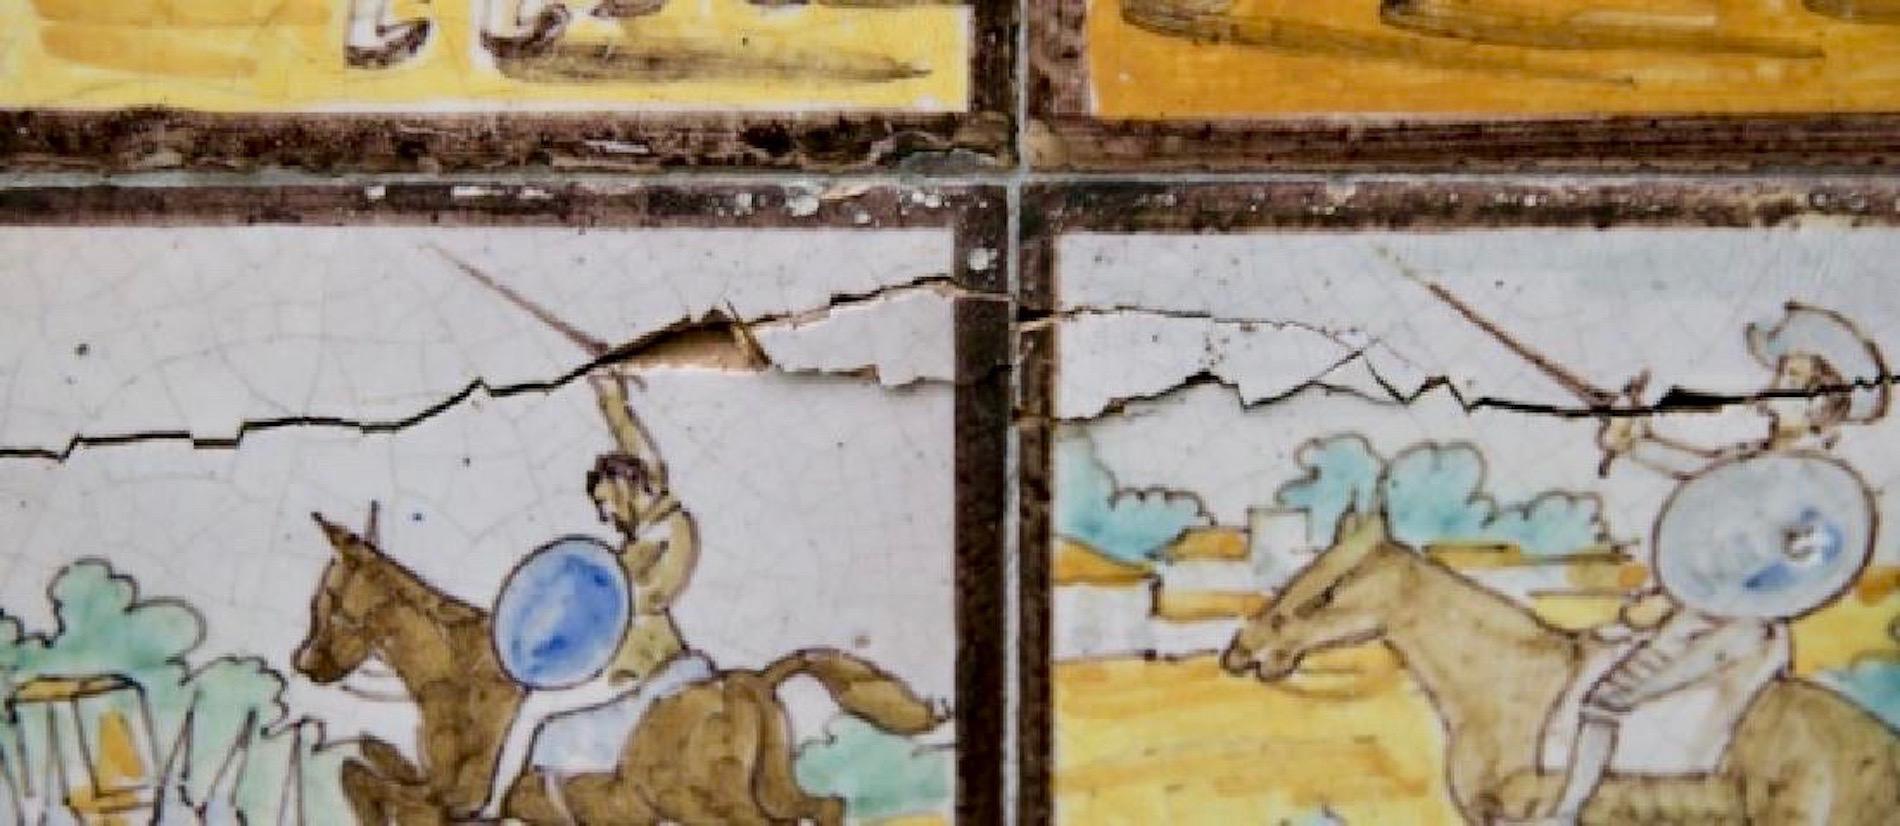 18th Century Spanish Tile Wall Don Quixote Ceramic Hand Painted Narrative Folk Art